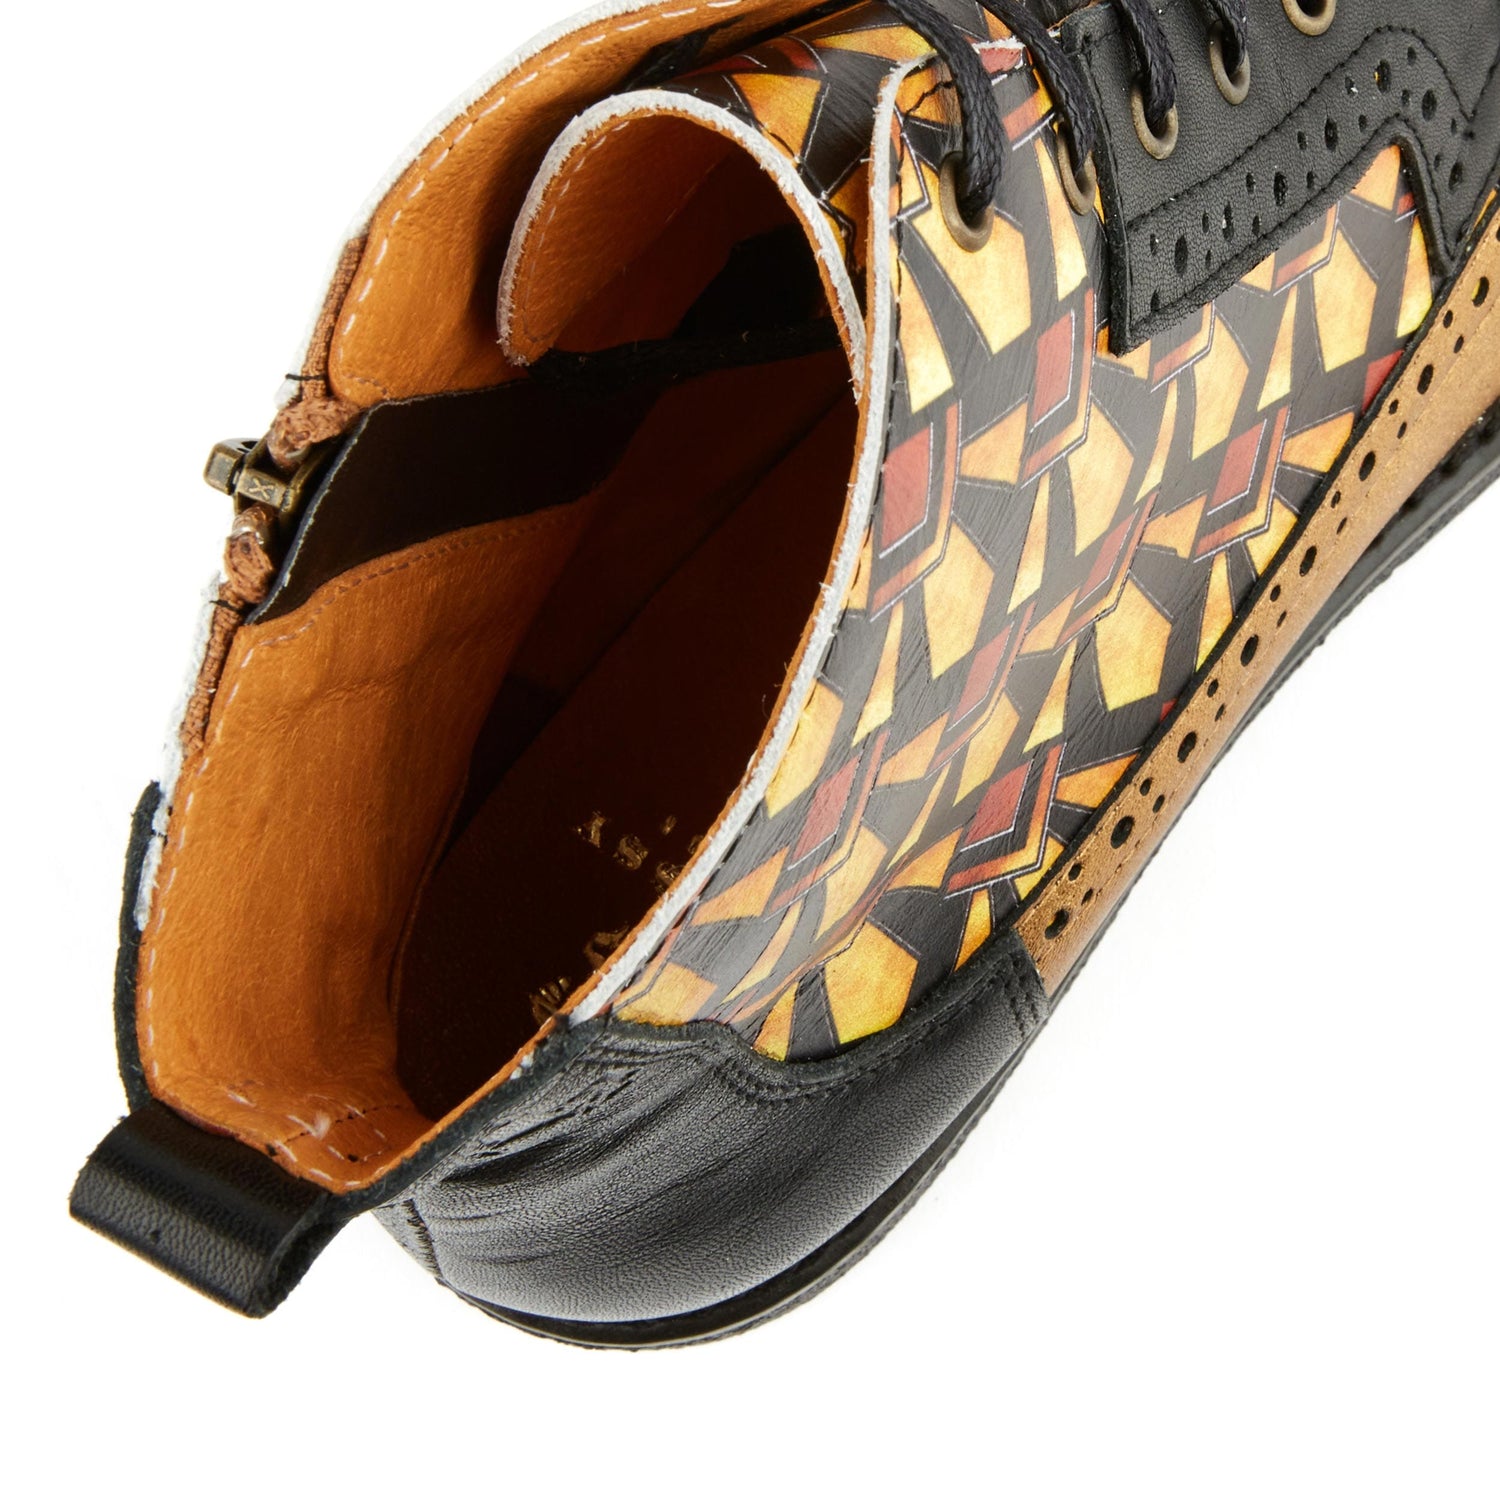 Hatter - Black & Gold Zelda Womens Ankle Boots Embassy London 